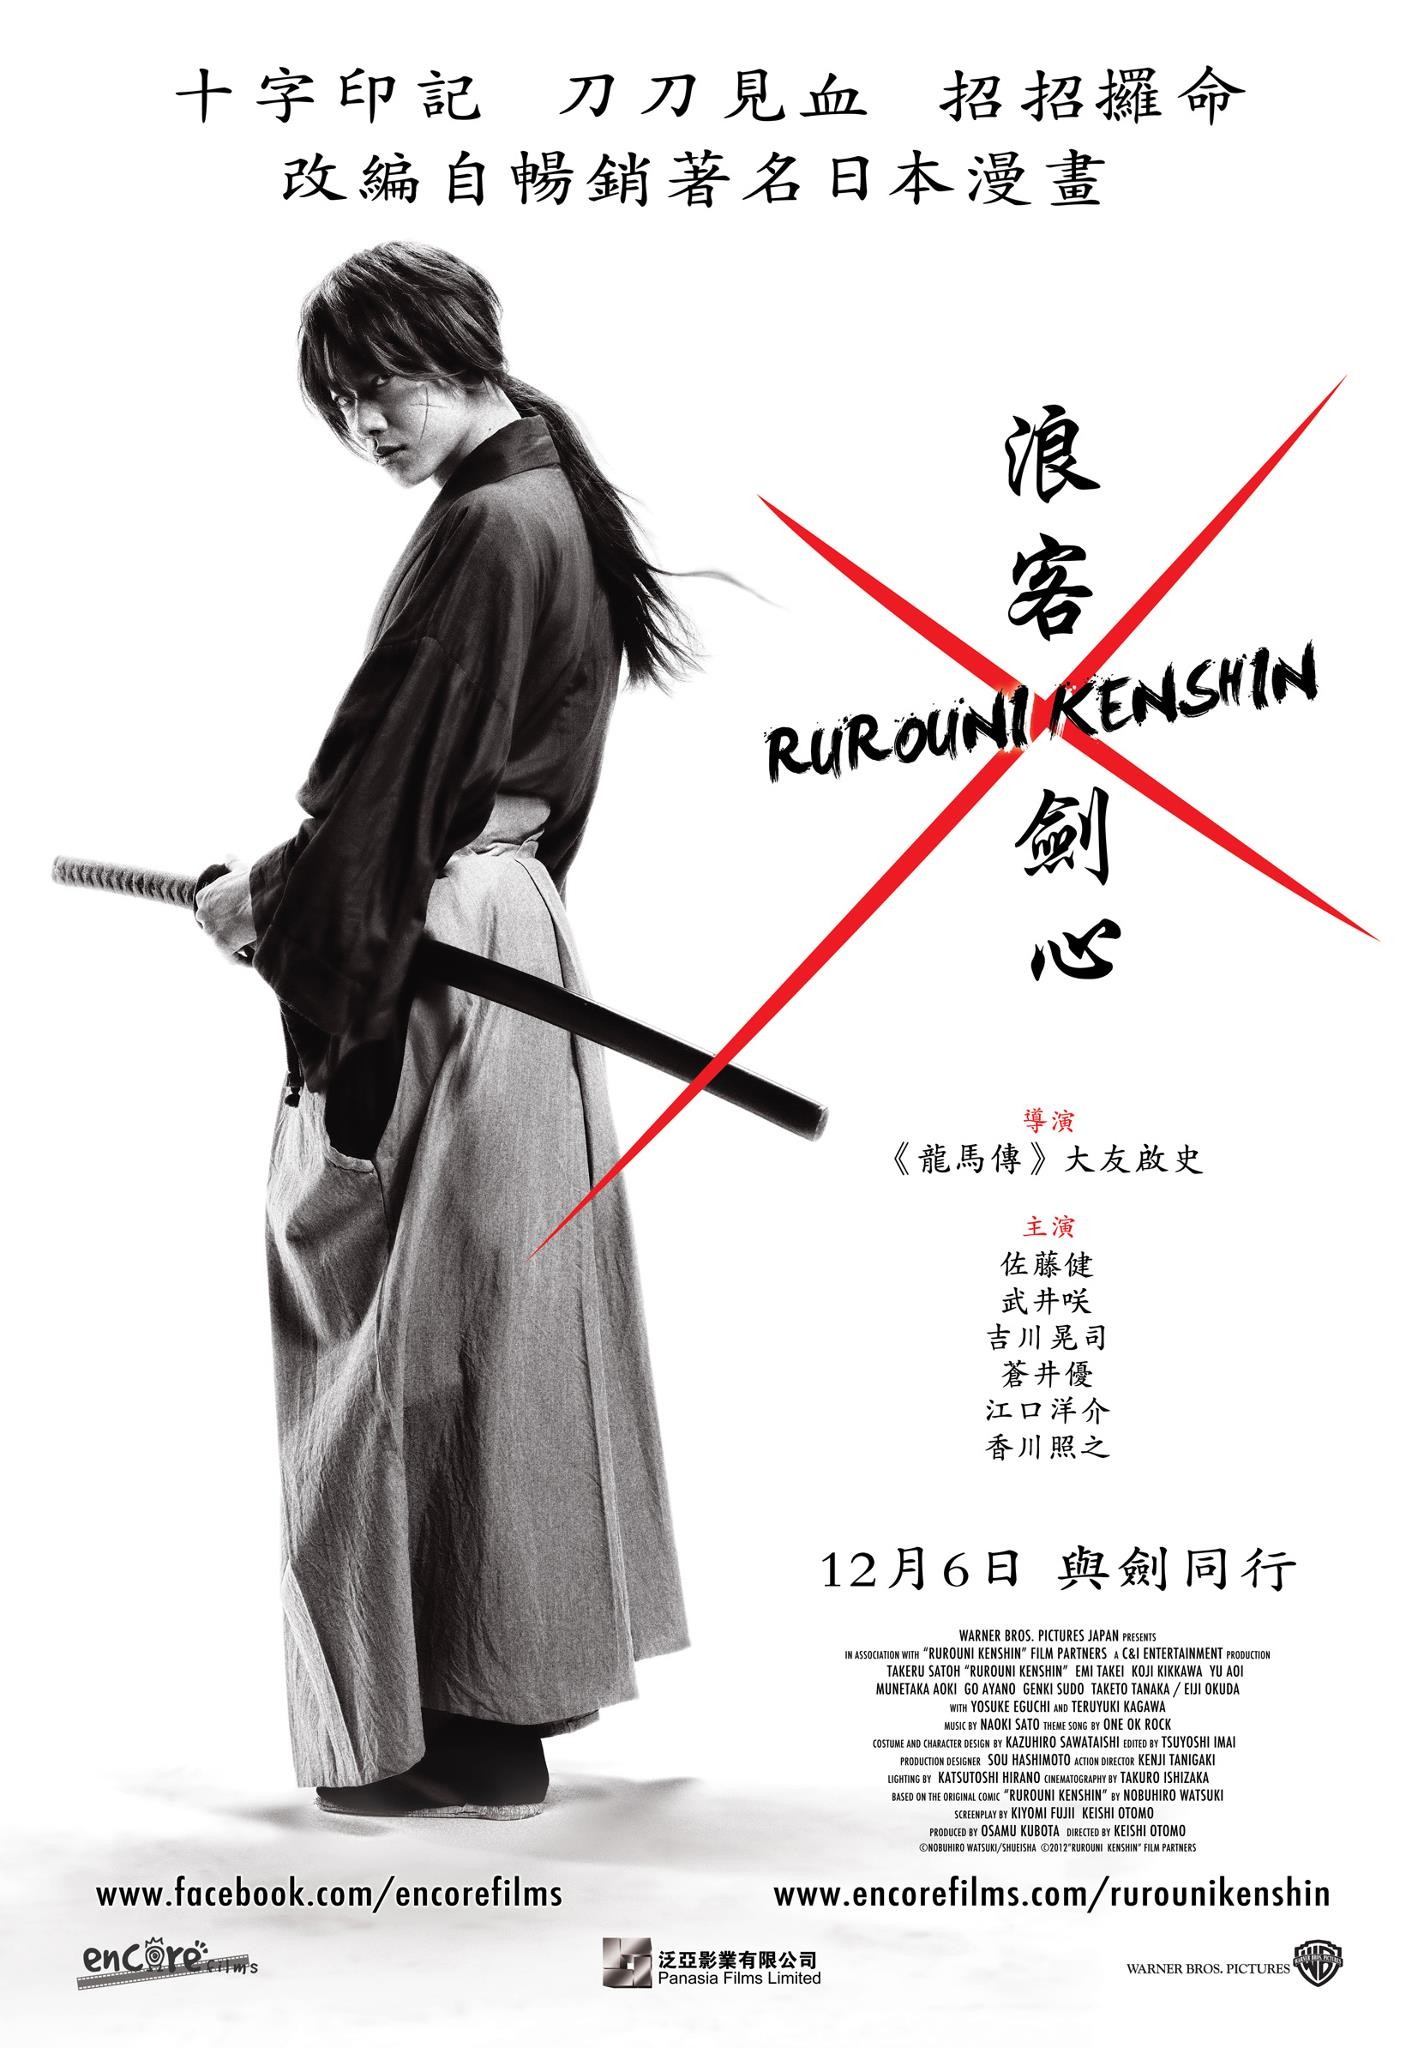 Mega Sized Movie Poster Image for Rurouni Kenshin (#2 of 2)